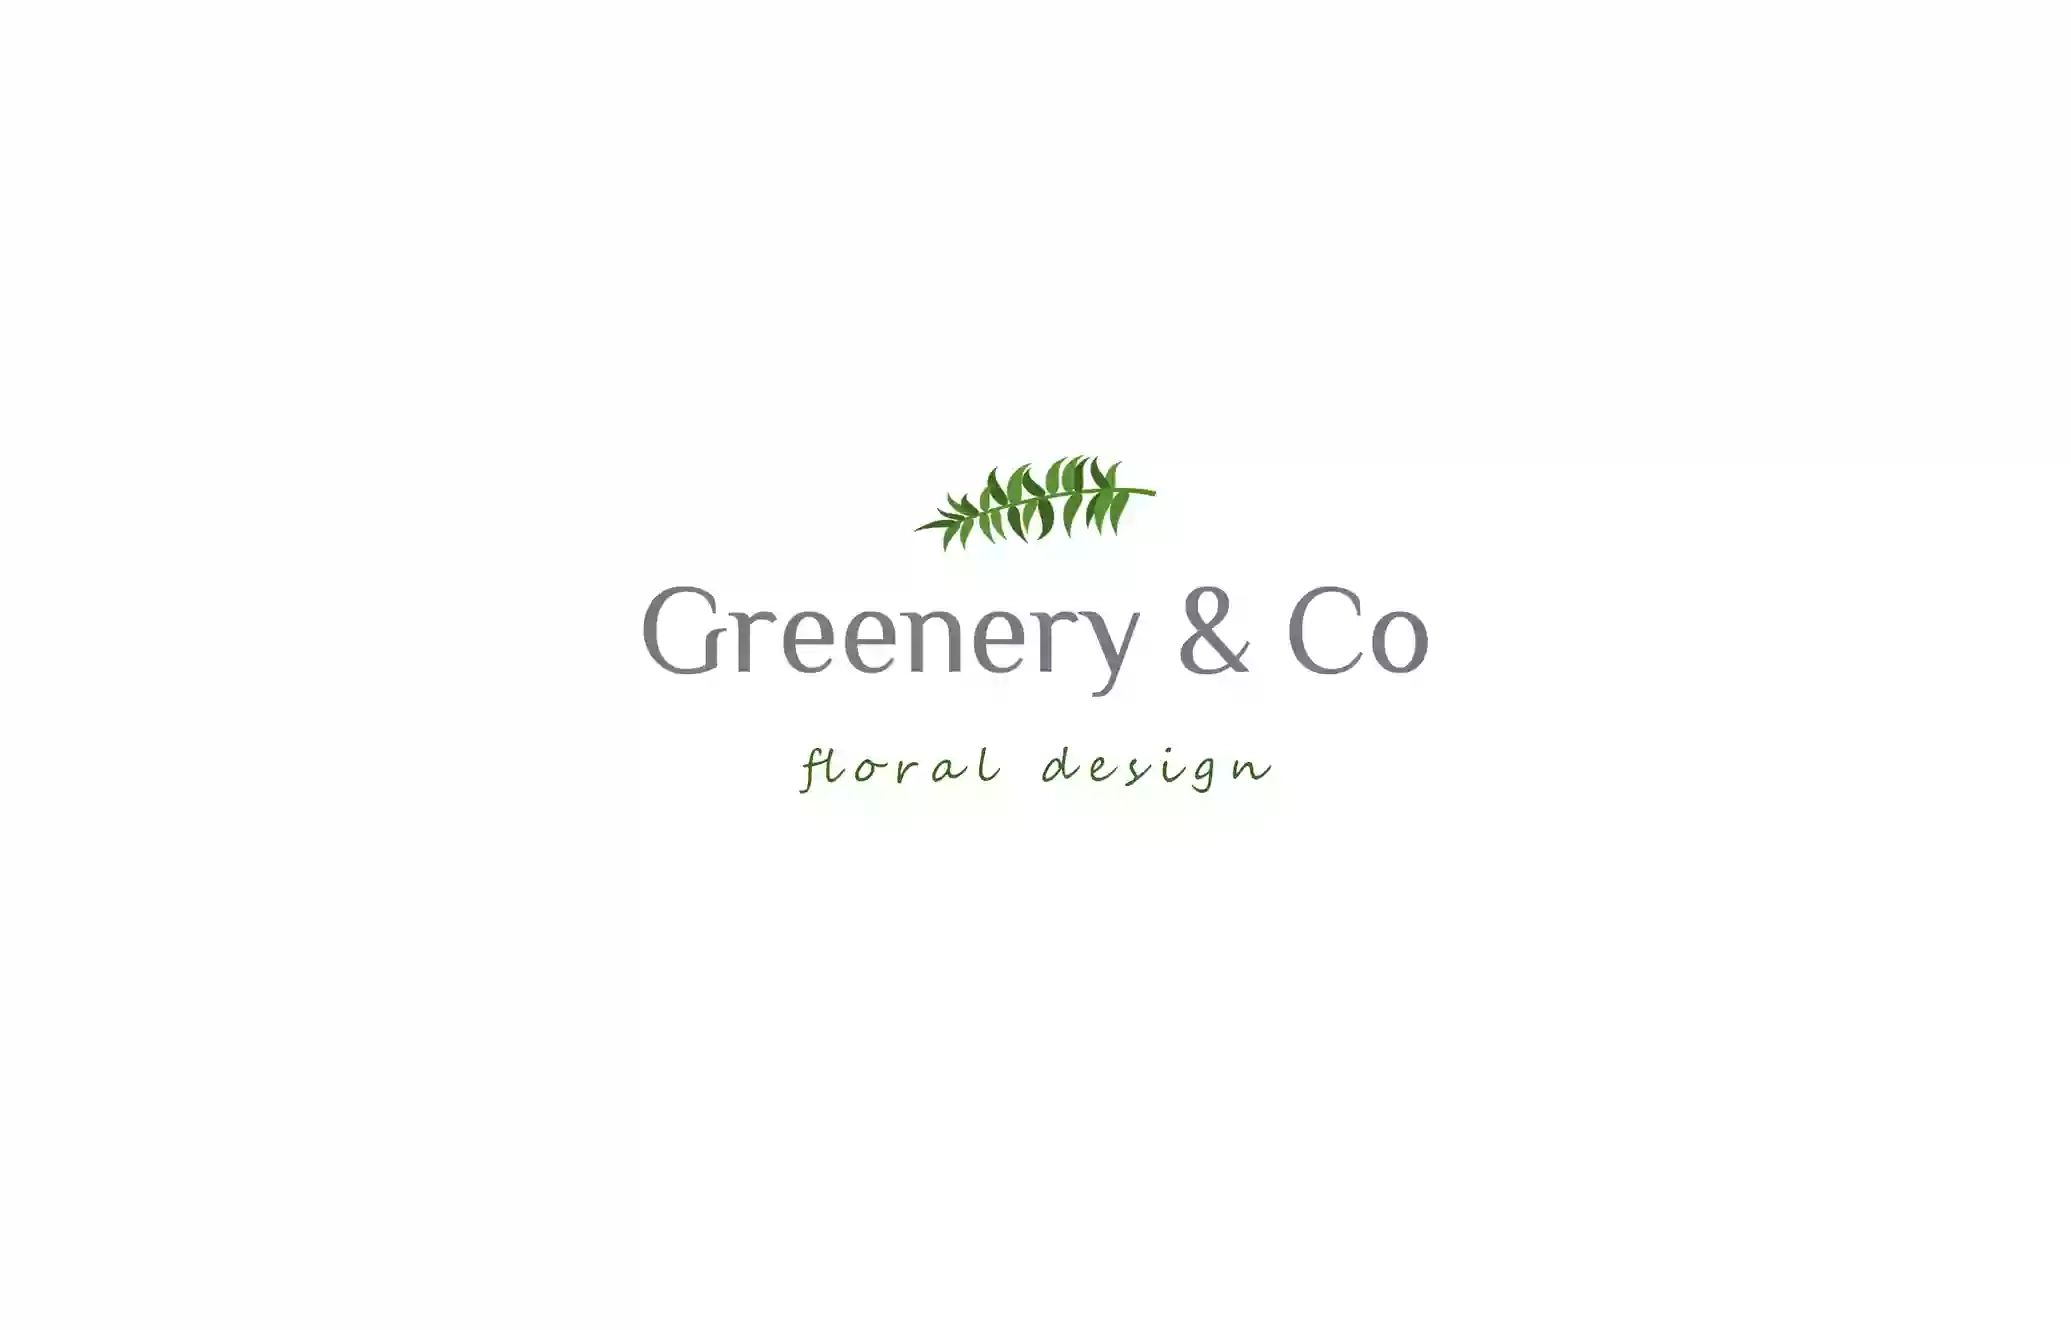 Greenery & Co